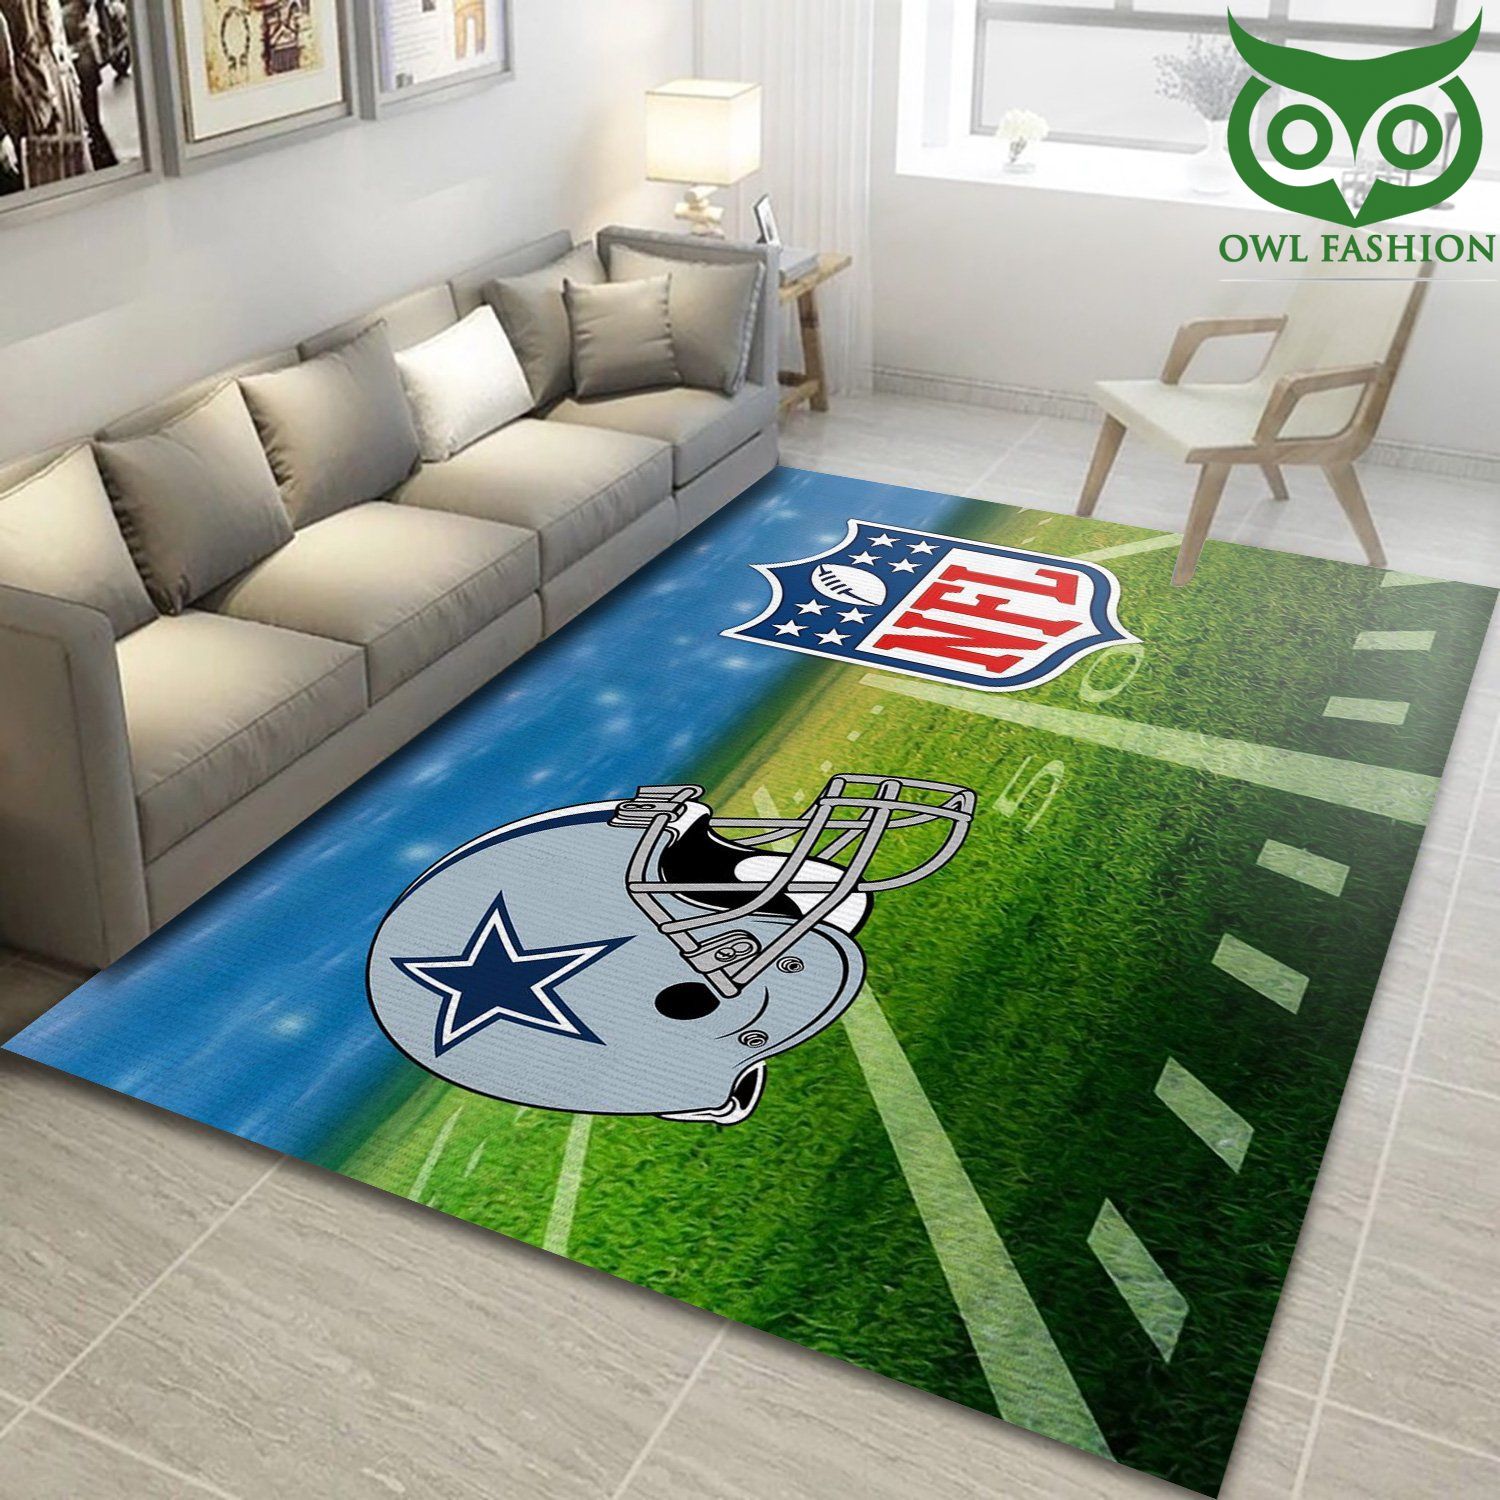 68 Dallas Cowboys Nfl Carpet Rug